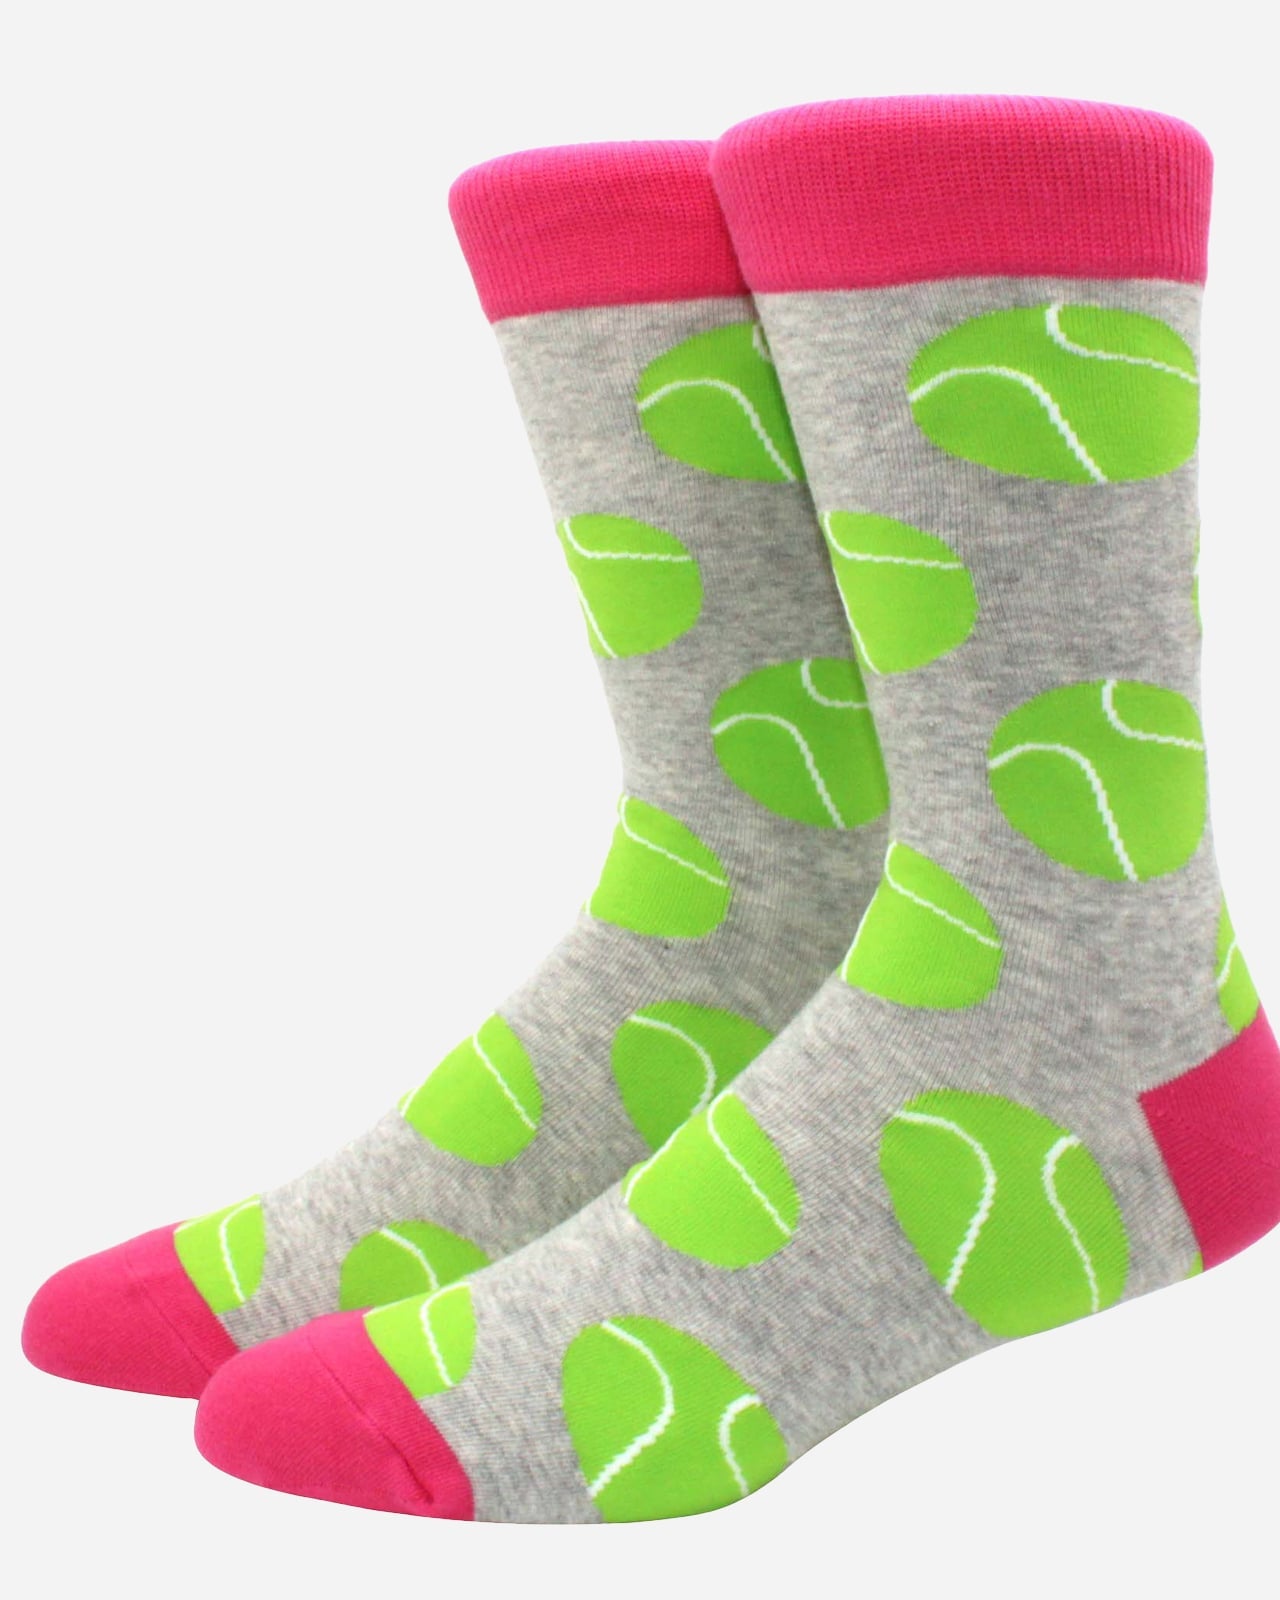 Tennis Socks - Men's Socks at Menzclub